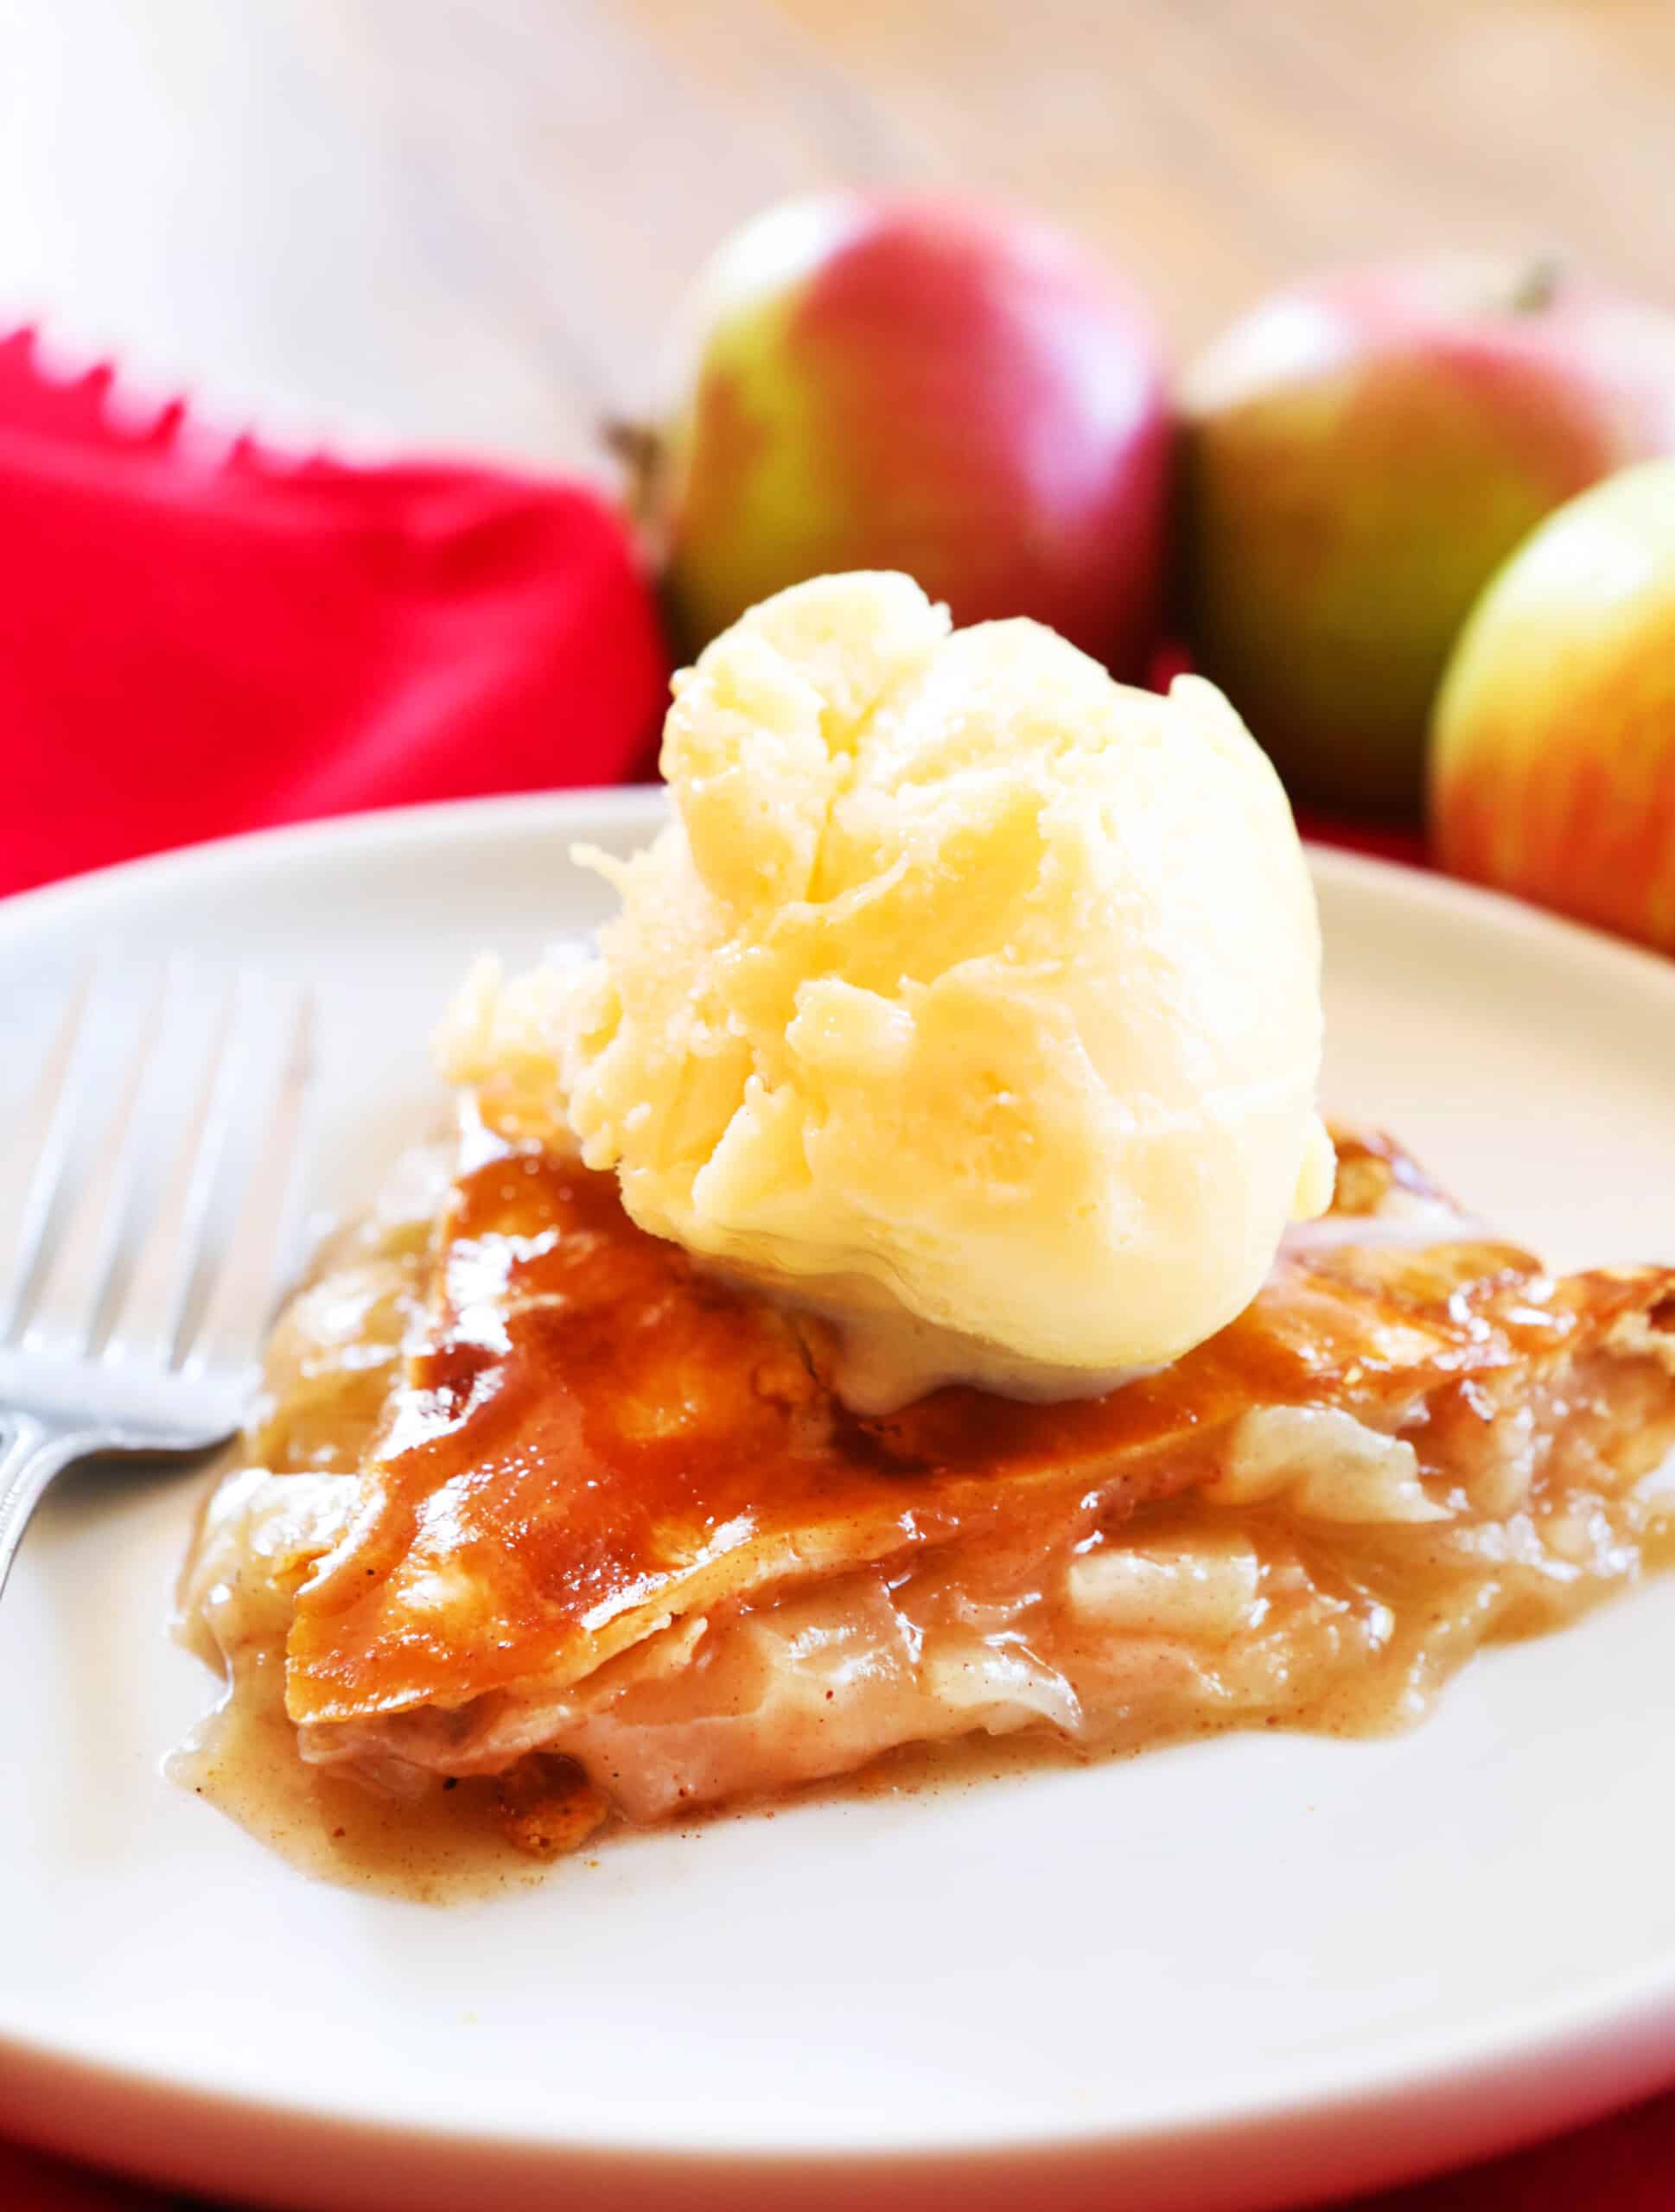 Slice of apple pie with a scoop of vanilla ice cream on top.